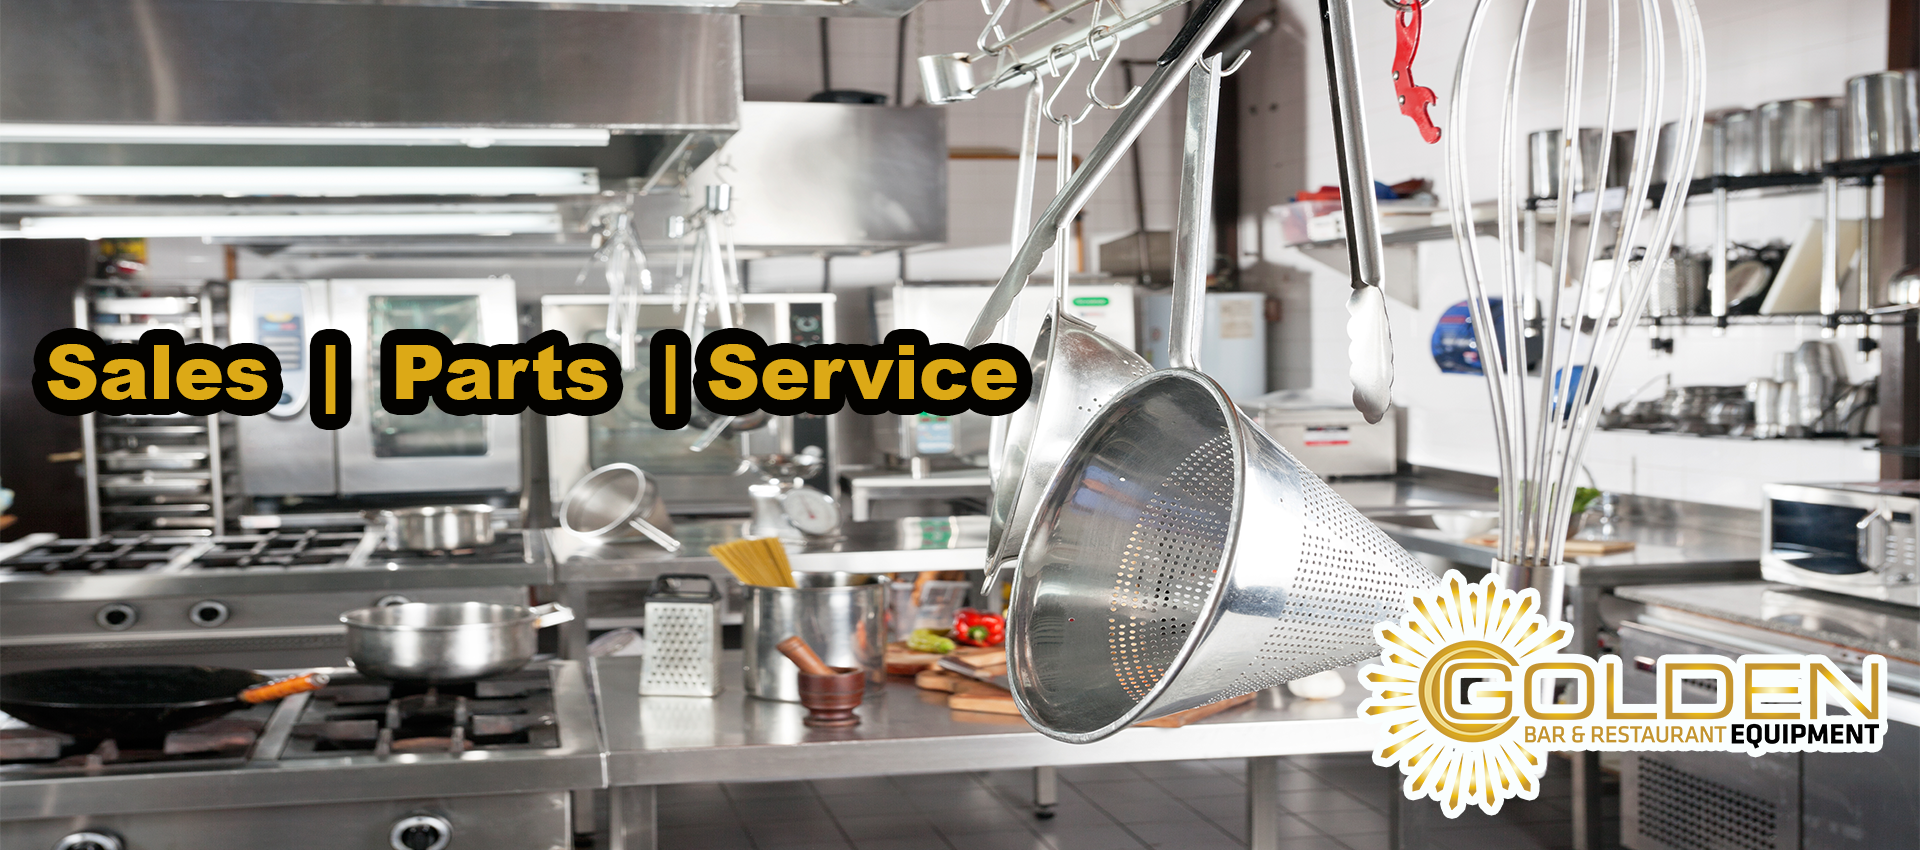 Restaurant Equipment in Las Vegas – Food Truck Manufacturer – Stainless Steel Fabrication